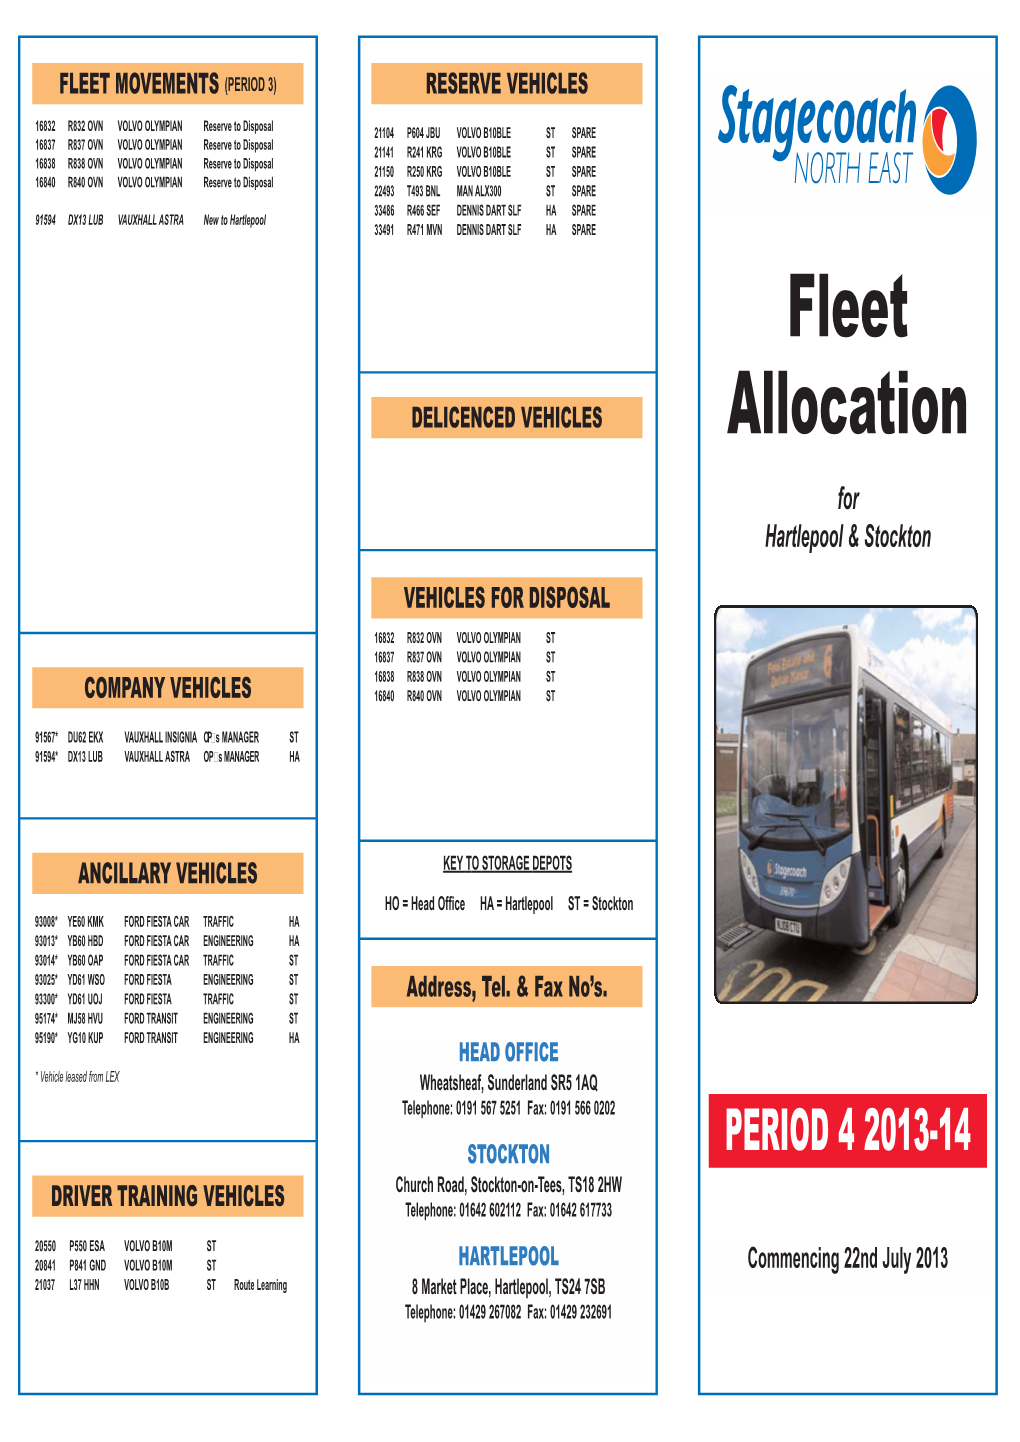 Fleet Allocation - Period 4 2013-14